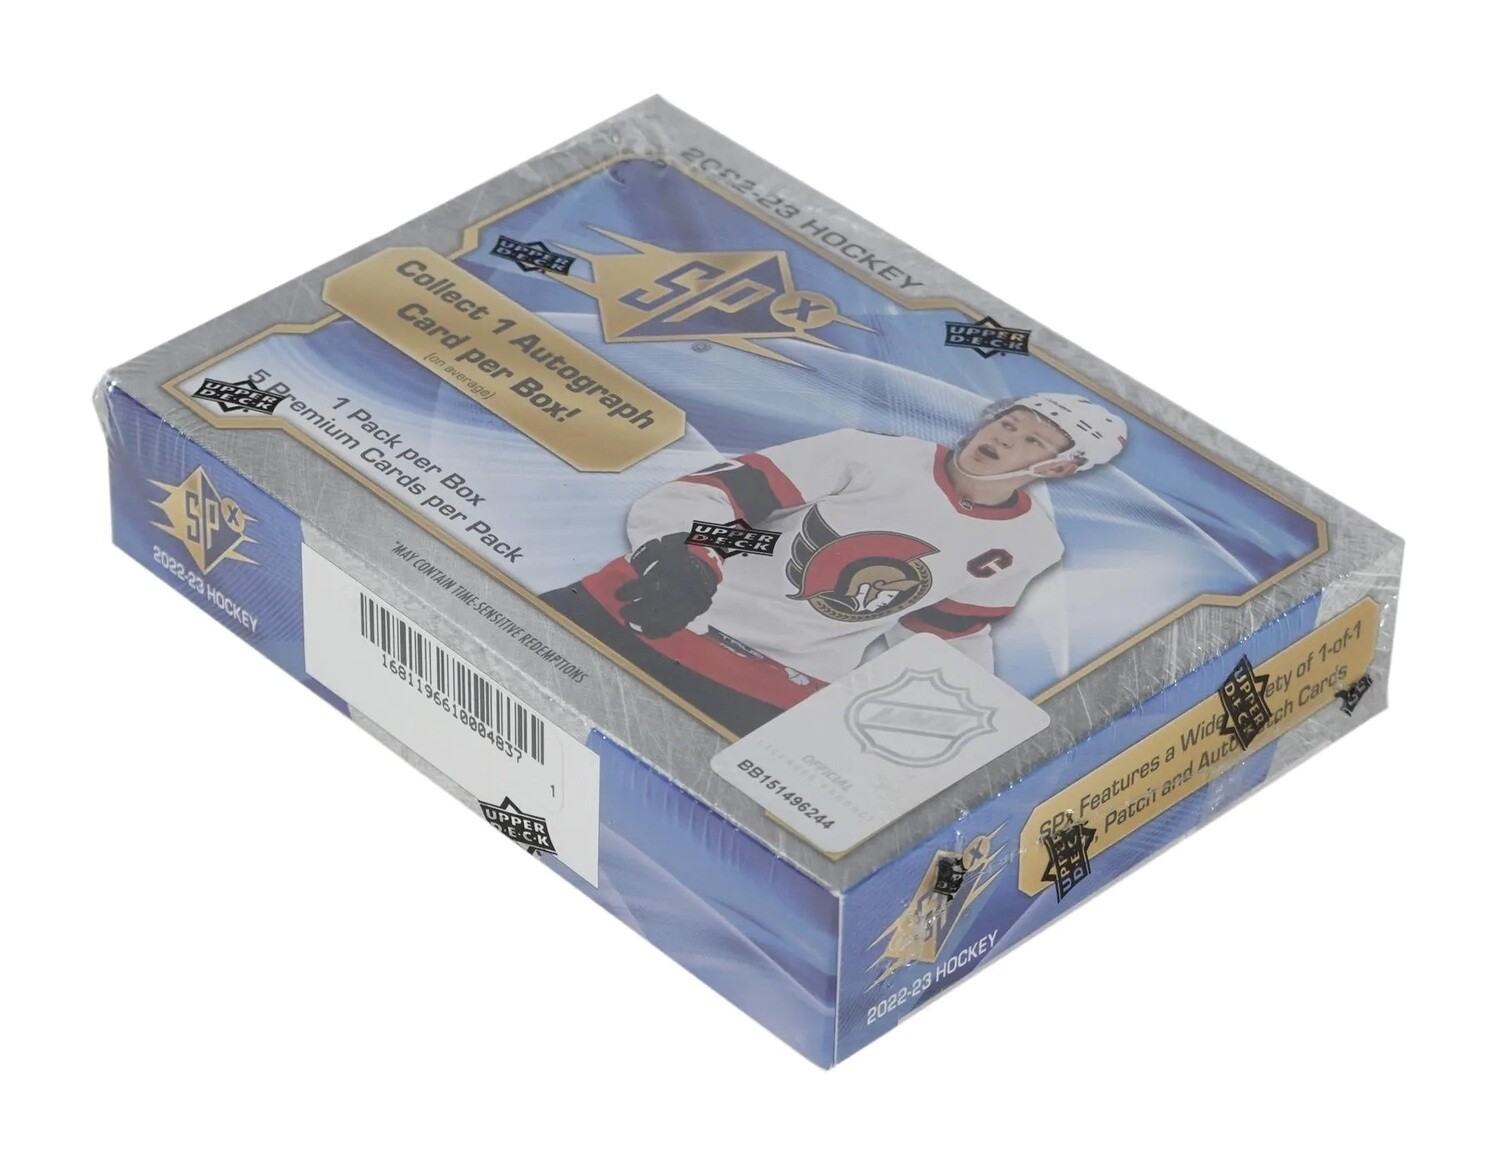 2022/23 Upper Deck SPx Hockey Hobby Box (case of 20 boxes)